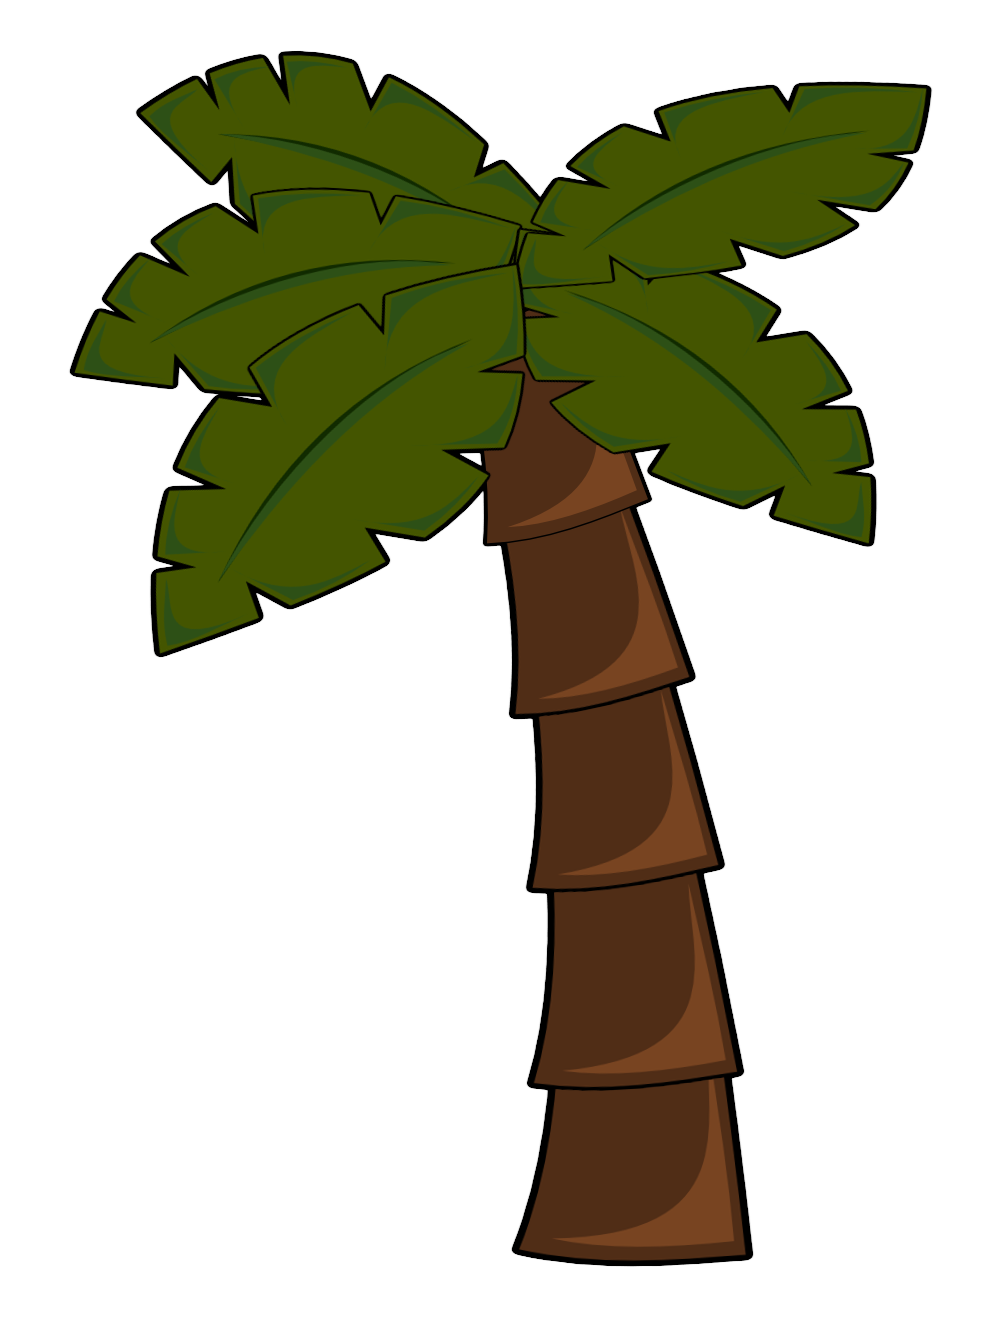 Luau palm tree.